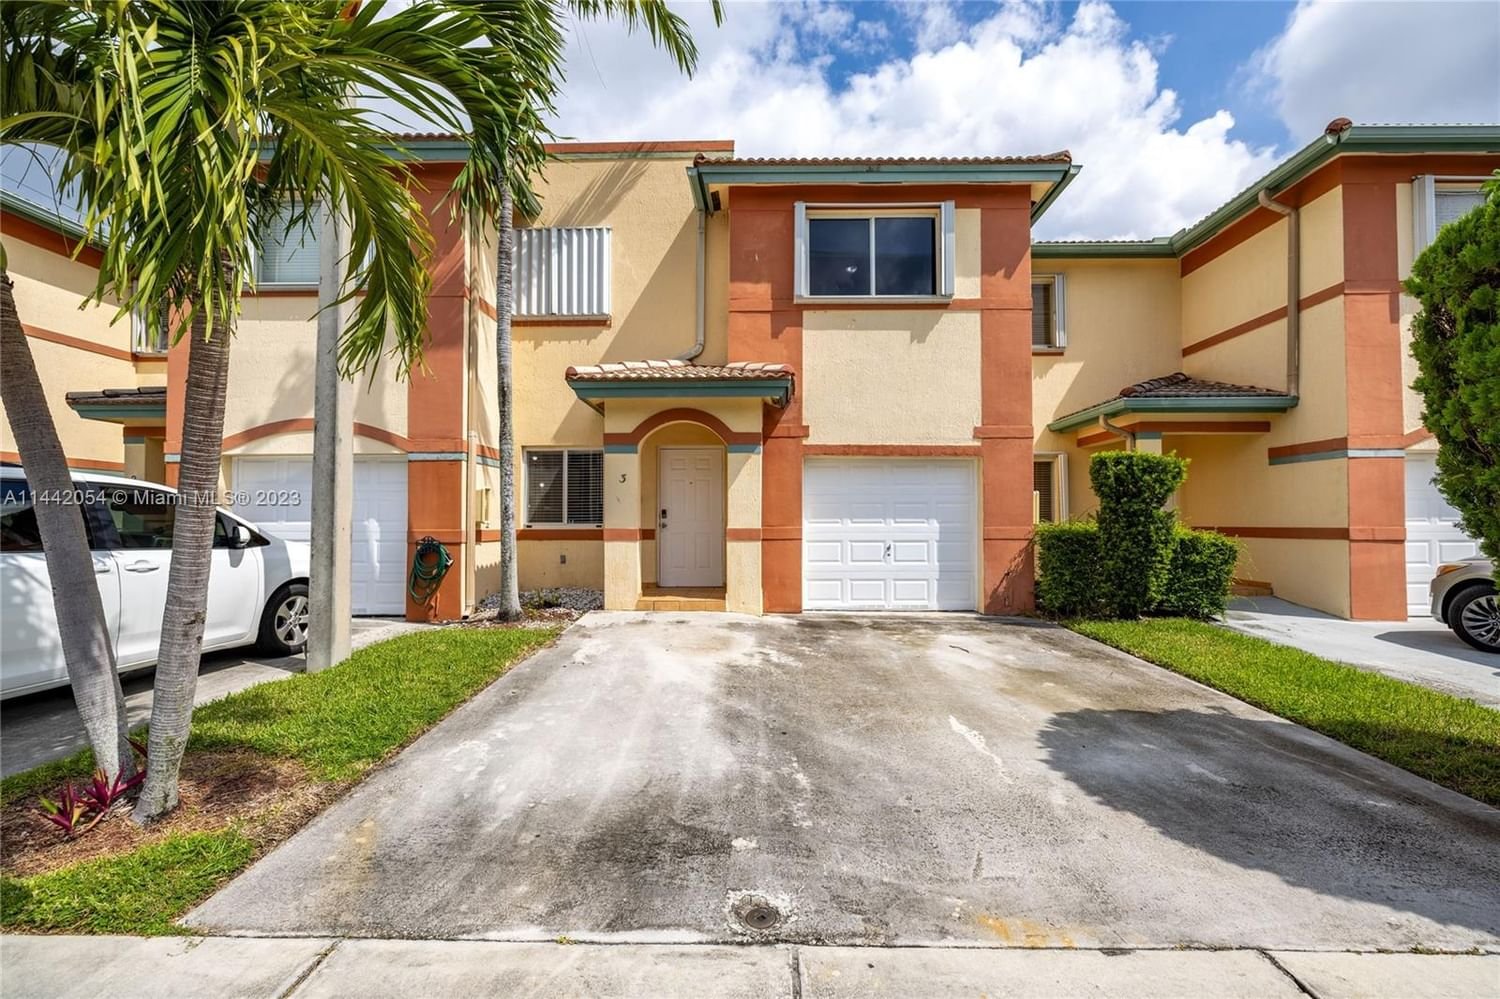 Real estate property located at 3871 147th Ave #3, Miami-Dade County, Miami, FL